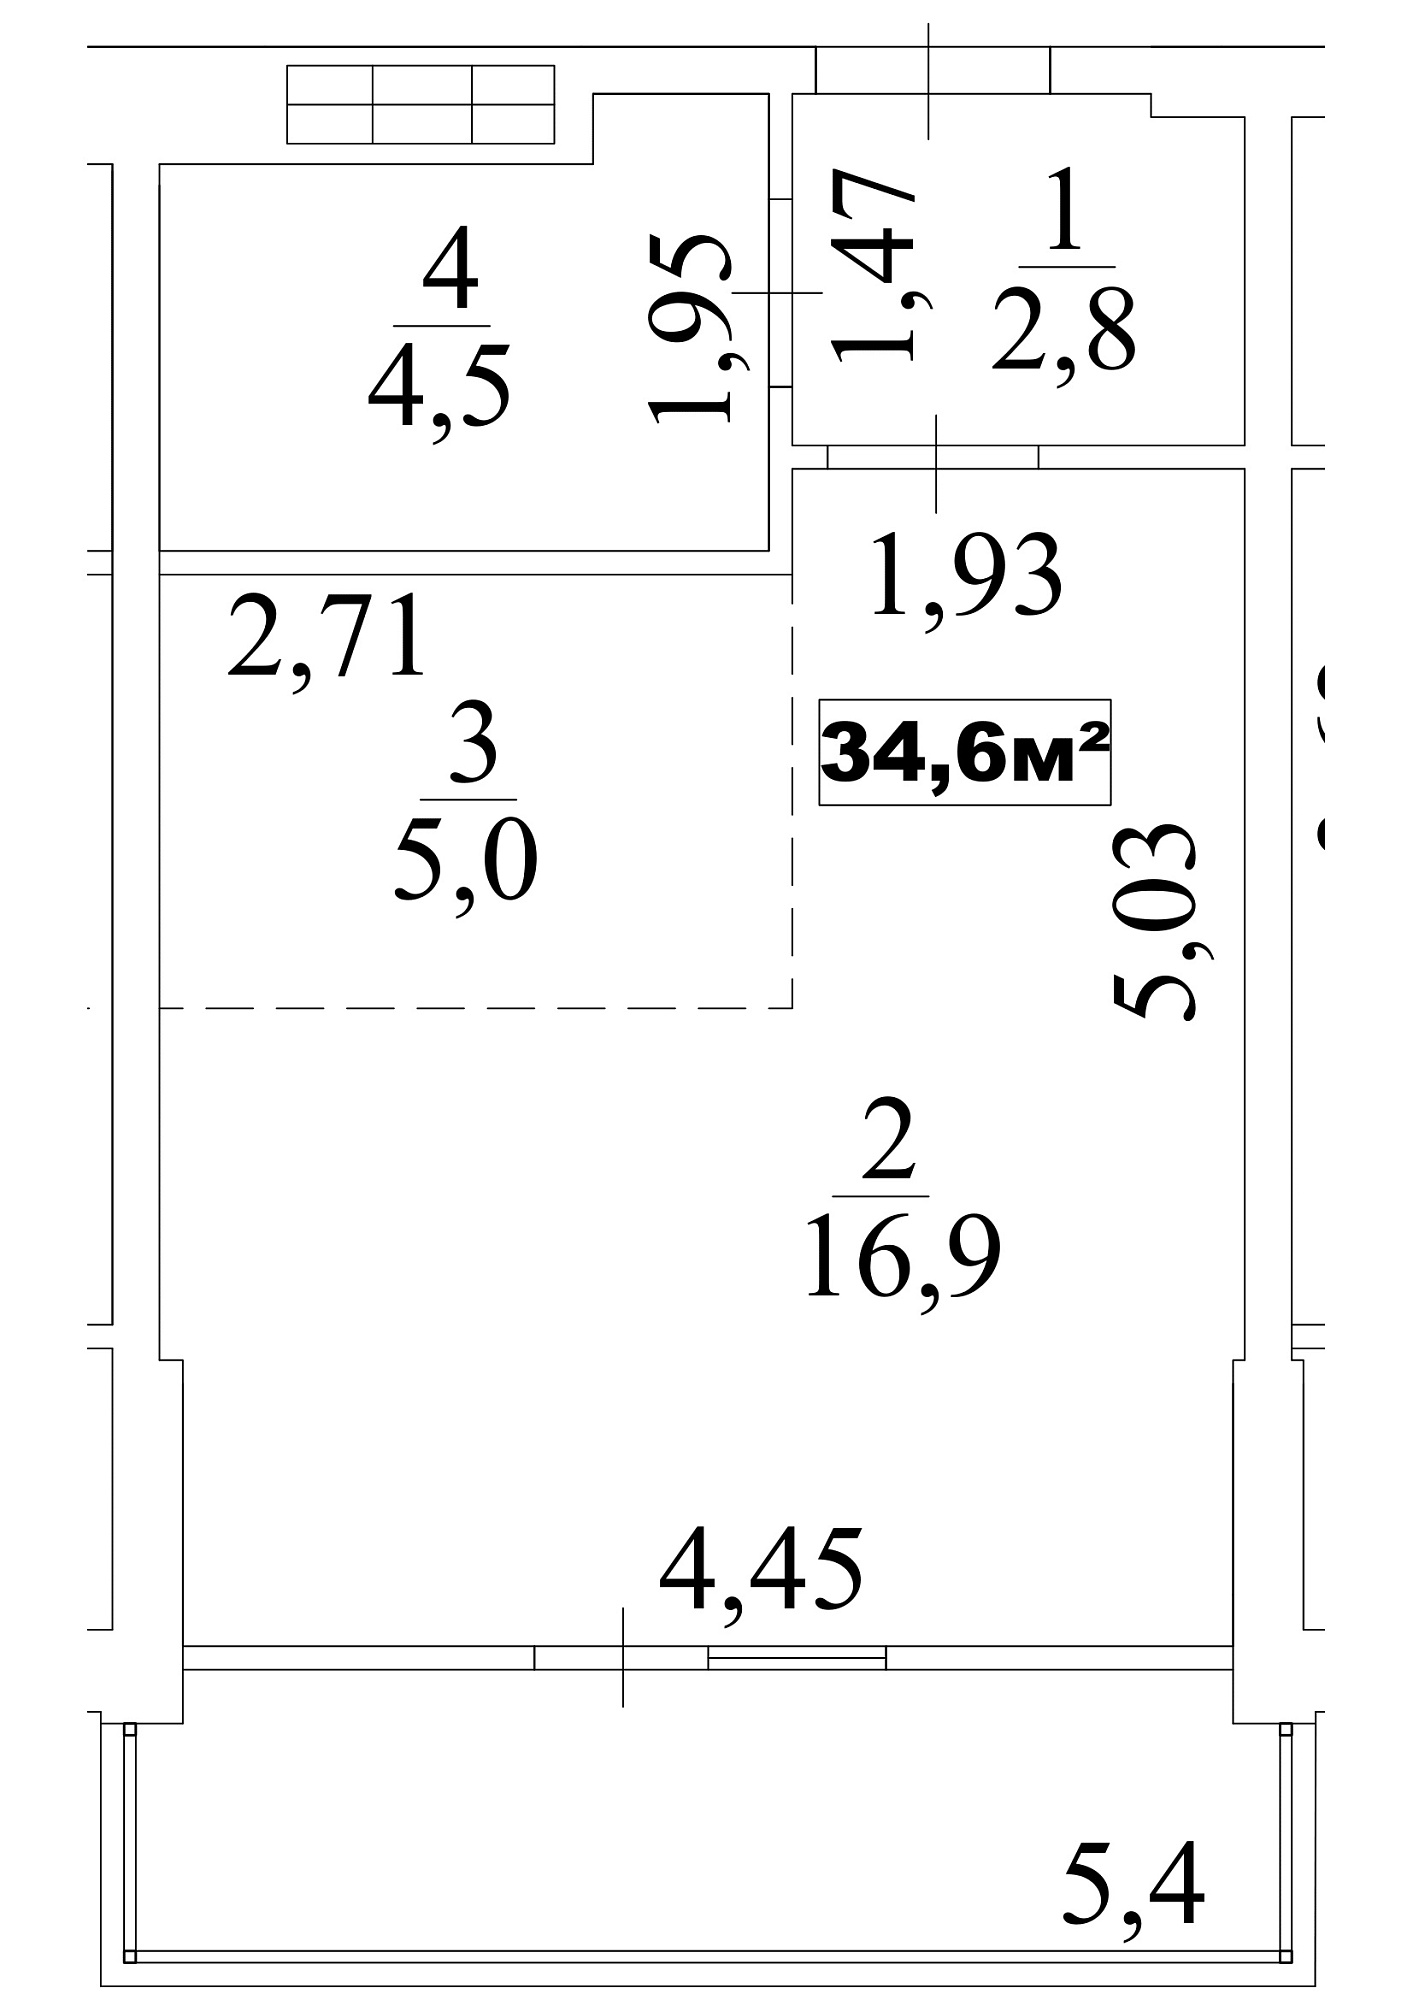 Planning Smart flats area 34.6m2, AB-10-01/0001б.